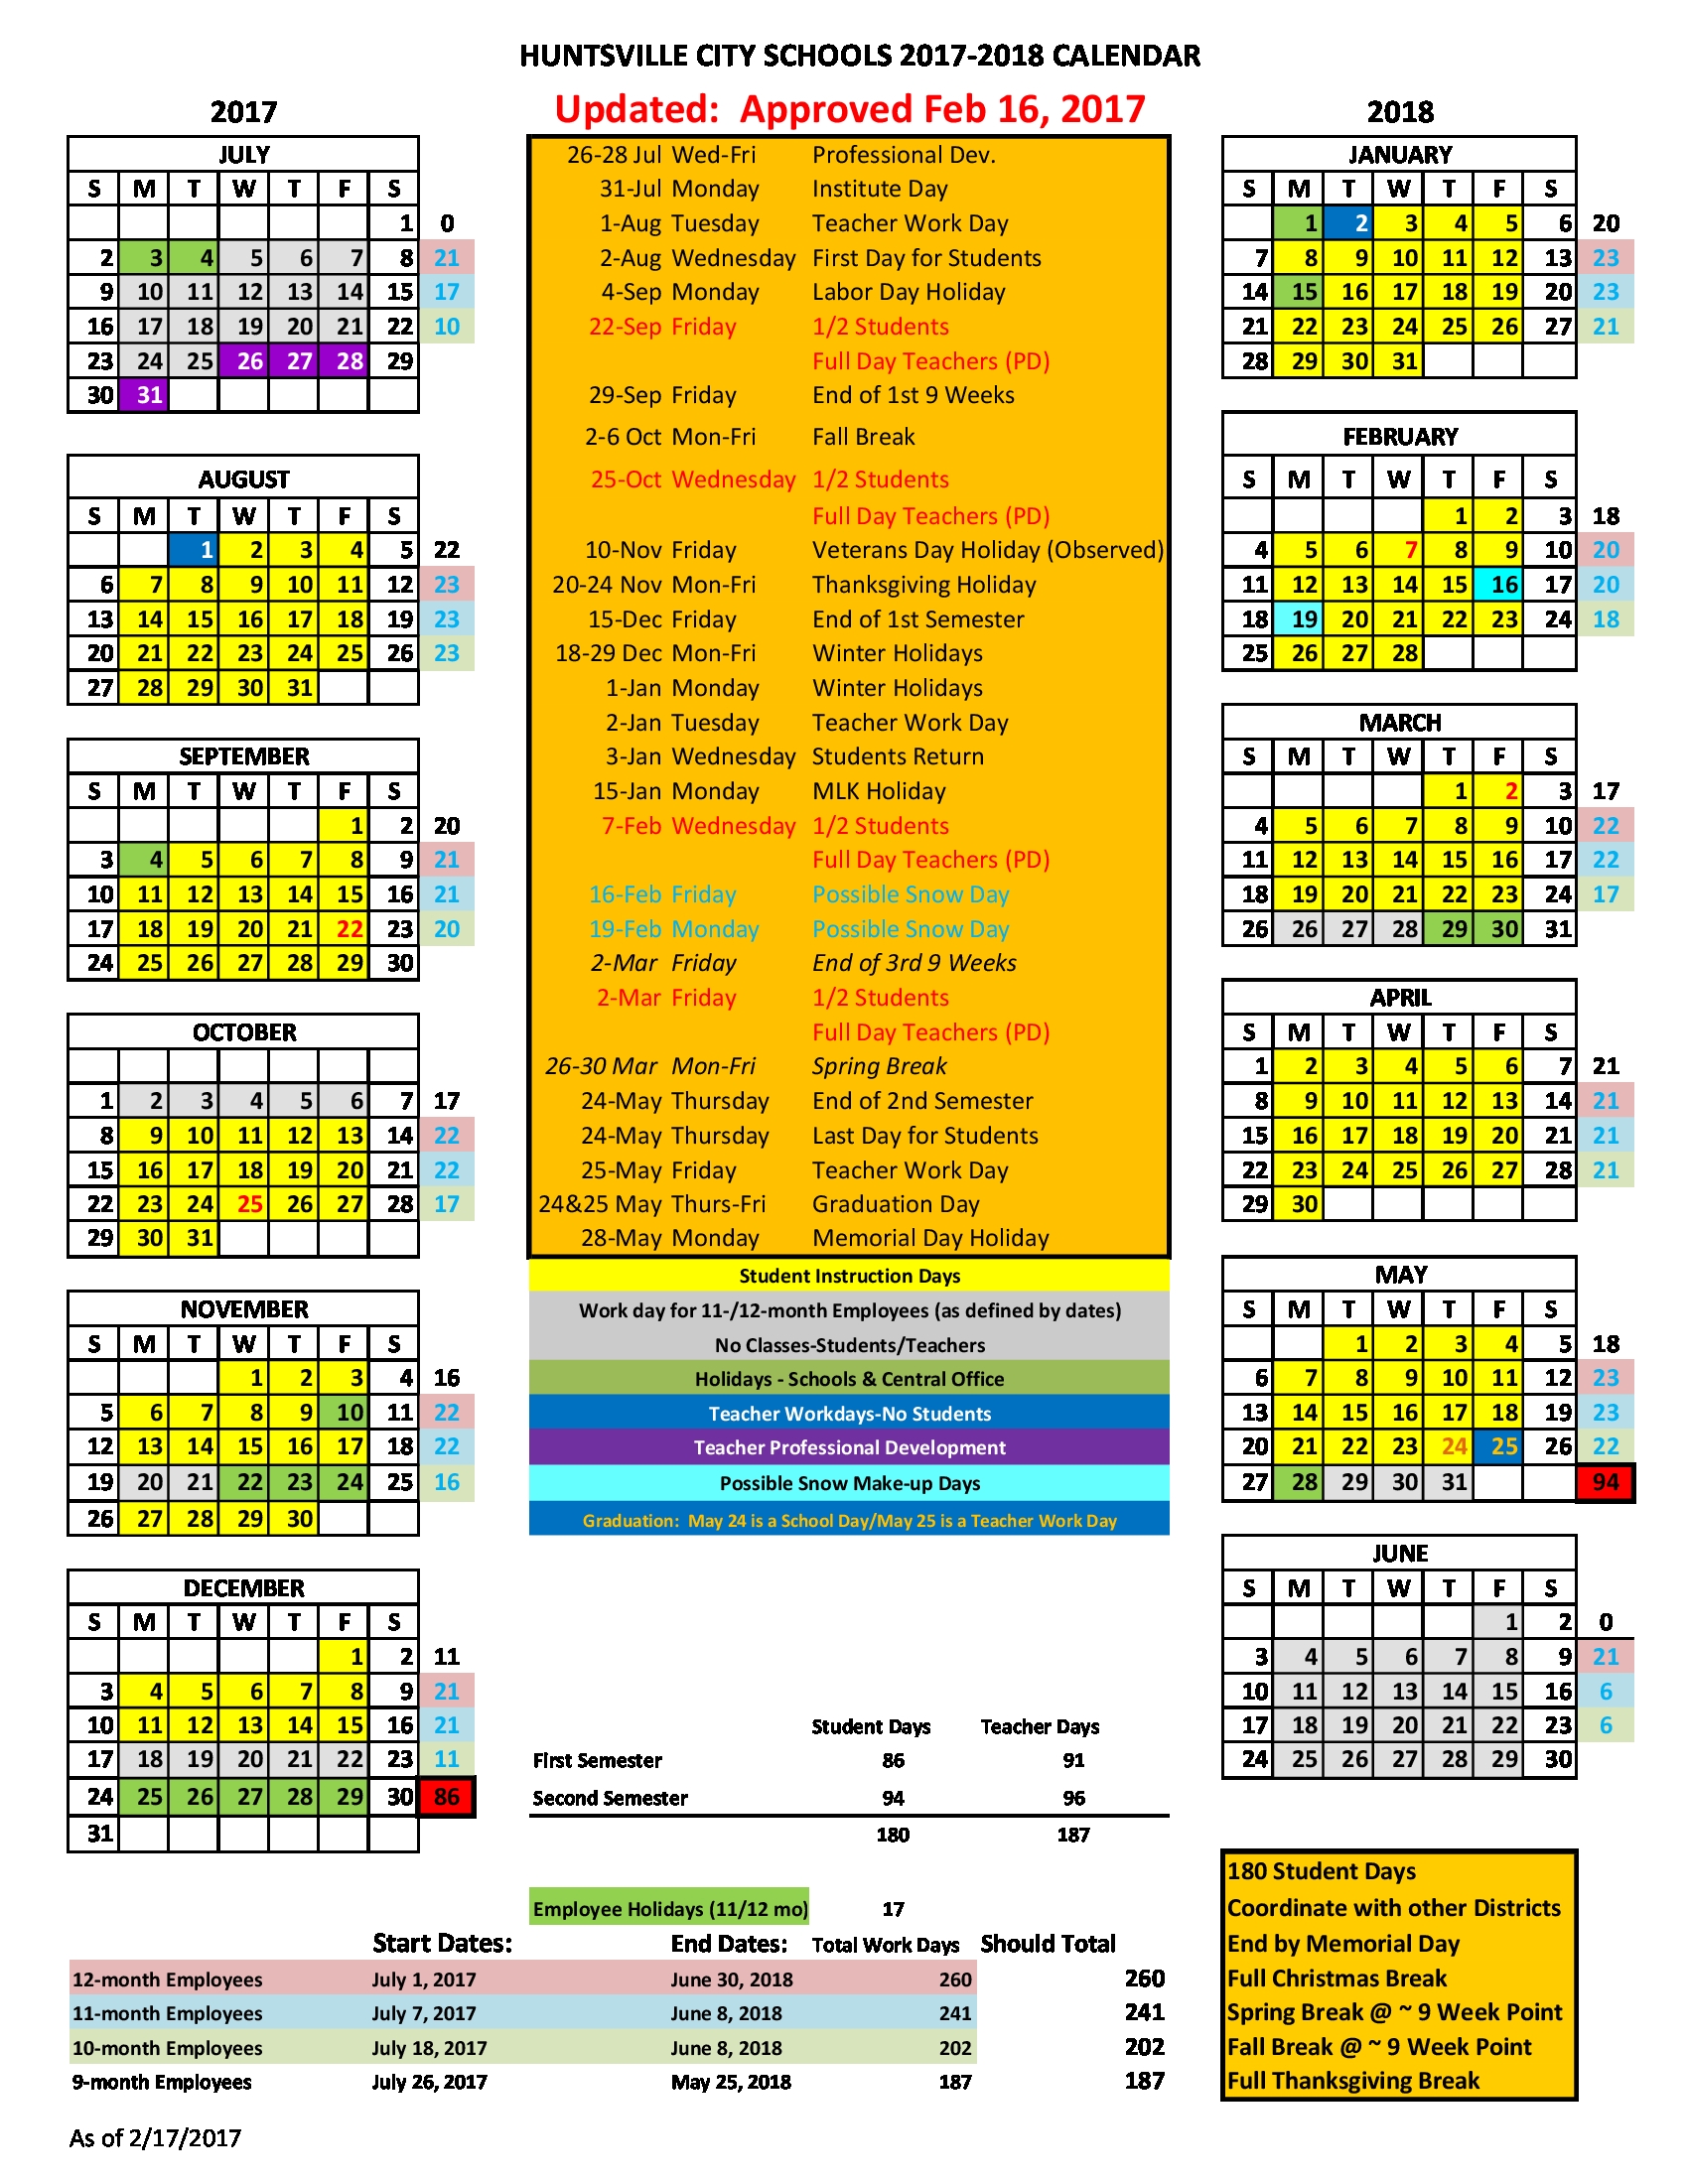 Huntsville City Schools Calendar 2017 2018 Bazga